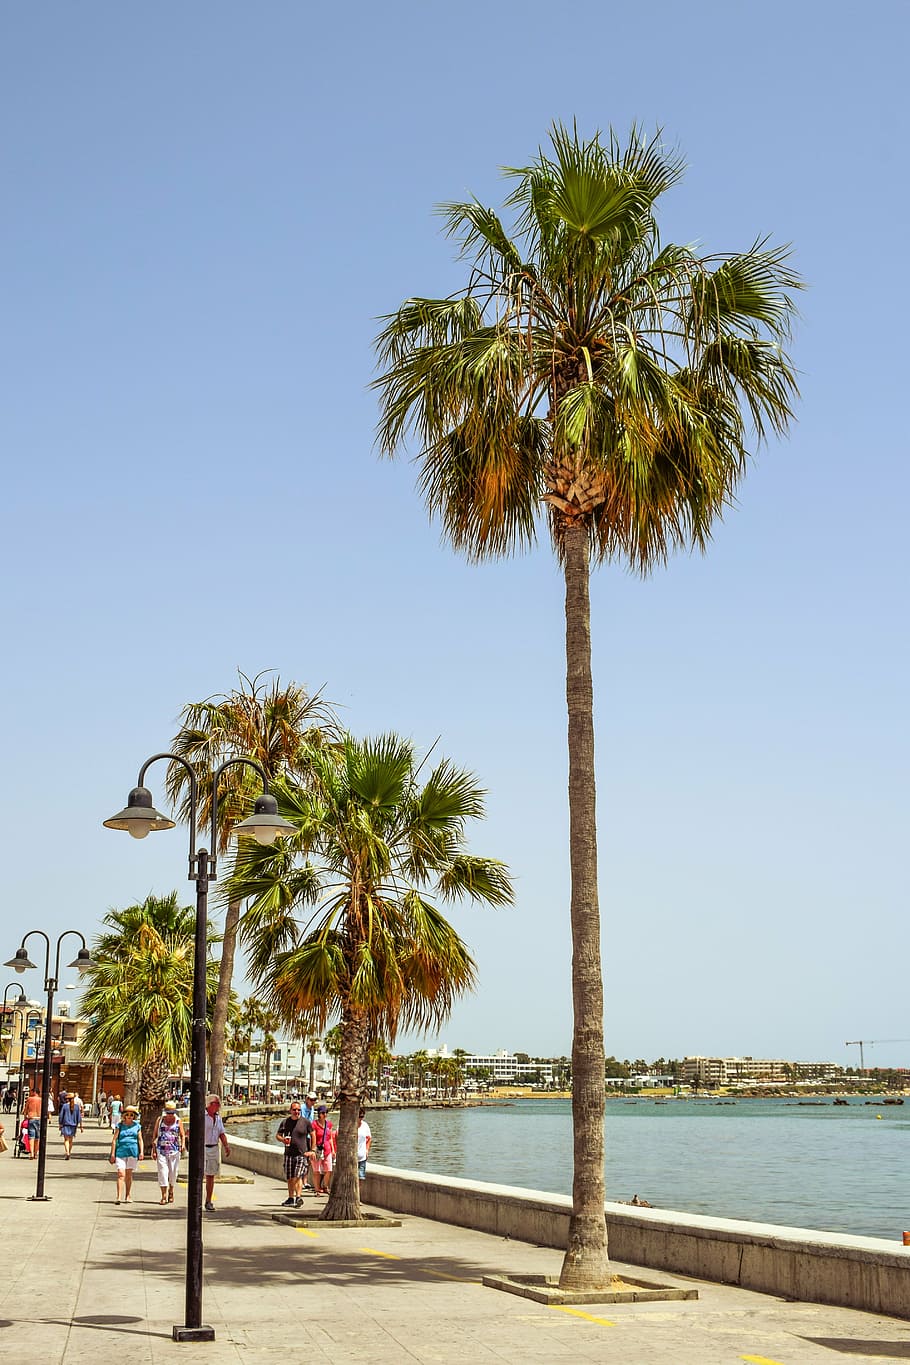 promenade, harbor, palm trees, tourism, paphos, cyprus, palm tree, tropical climate, sky, water